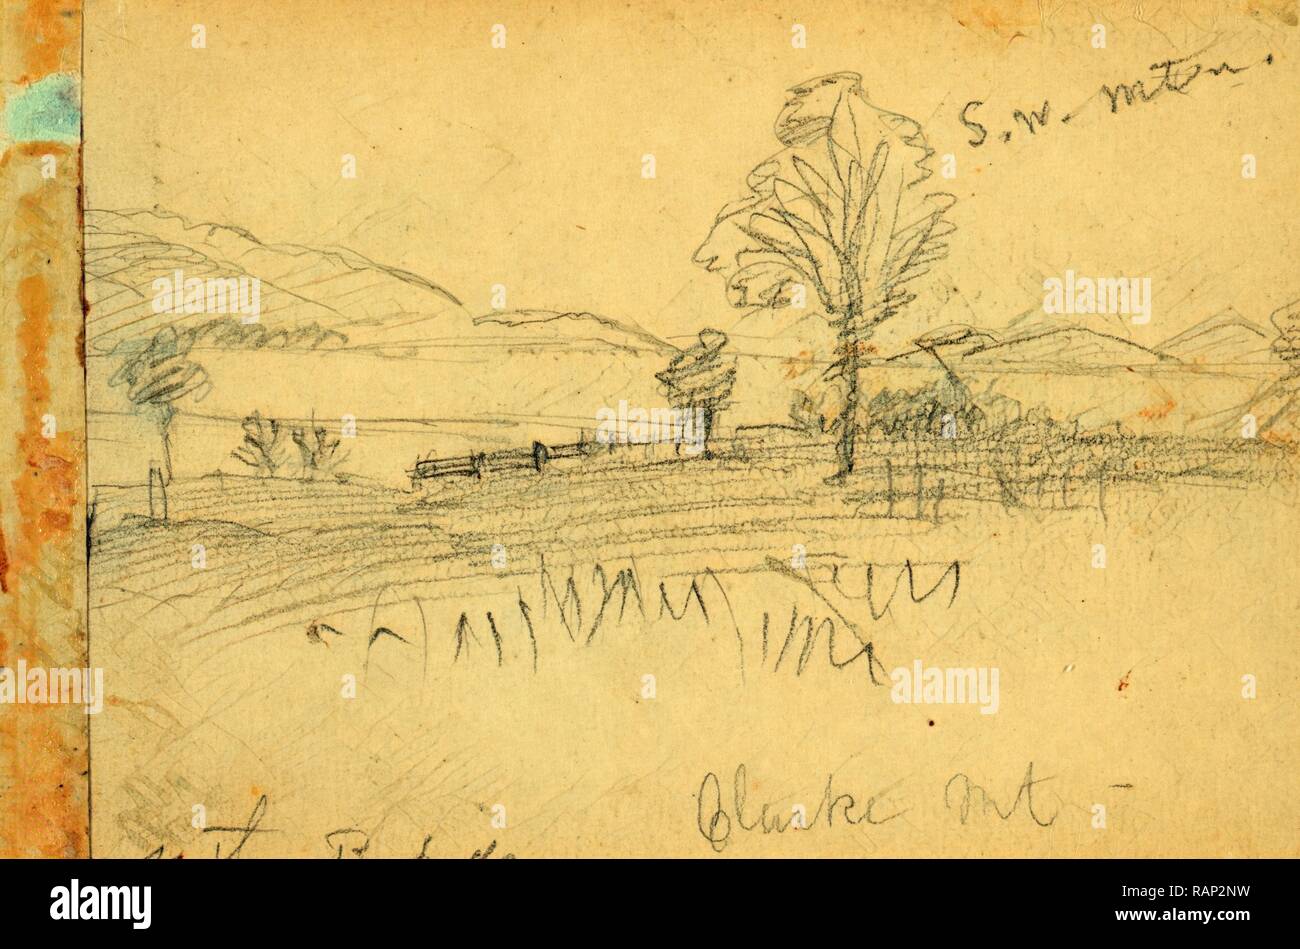 https://c8.alamy.com/comp/RAP2NW/willistons-battery-near-fredericksburg-1862-1862-november-december-drawing-on-cream-paper-pencil-98-x-183-cm-reimagined-RAP2NW.jpg